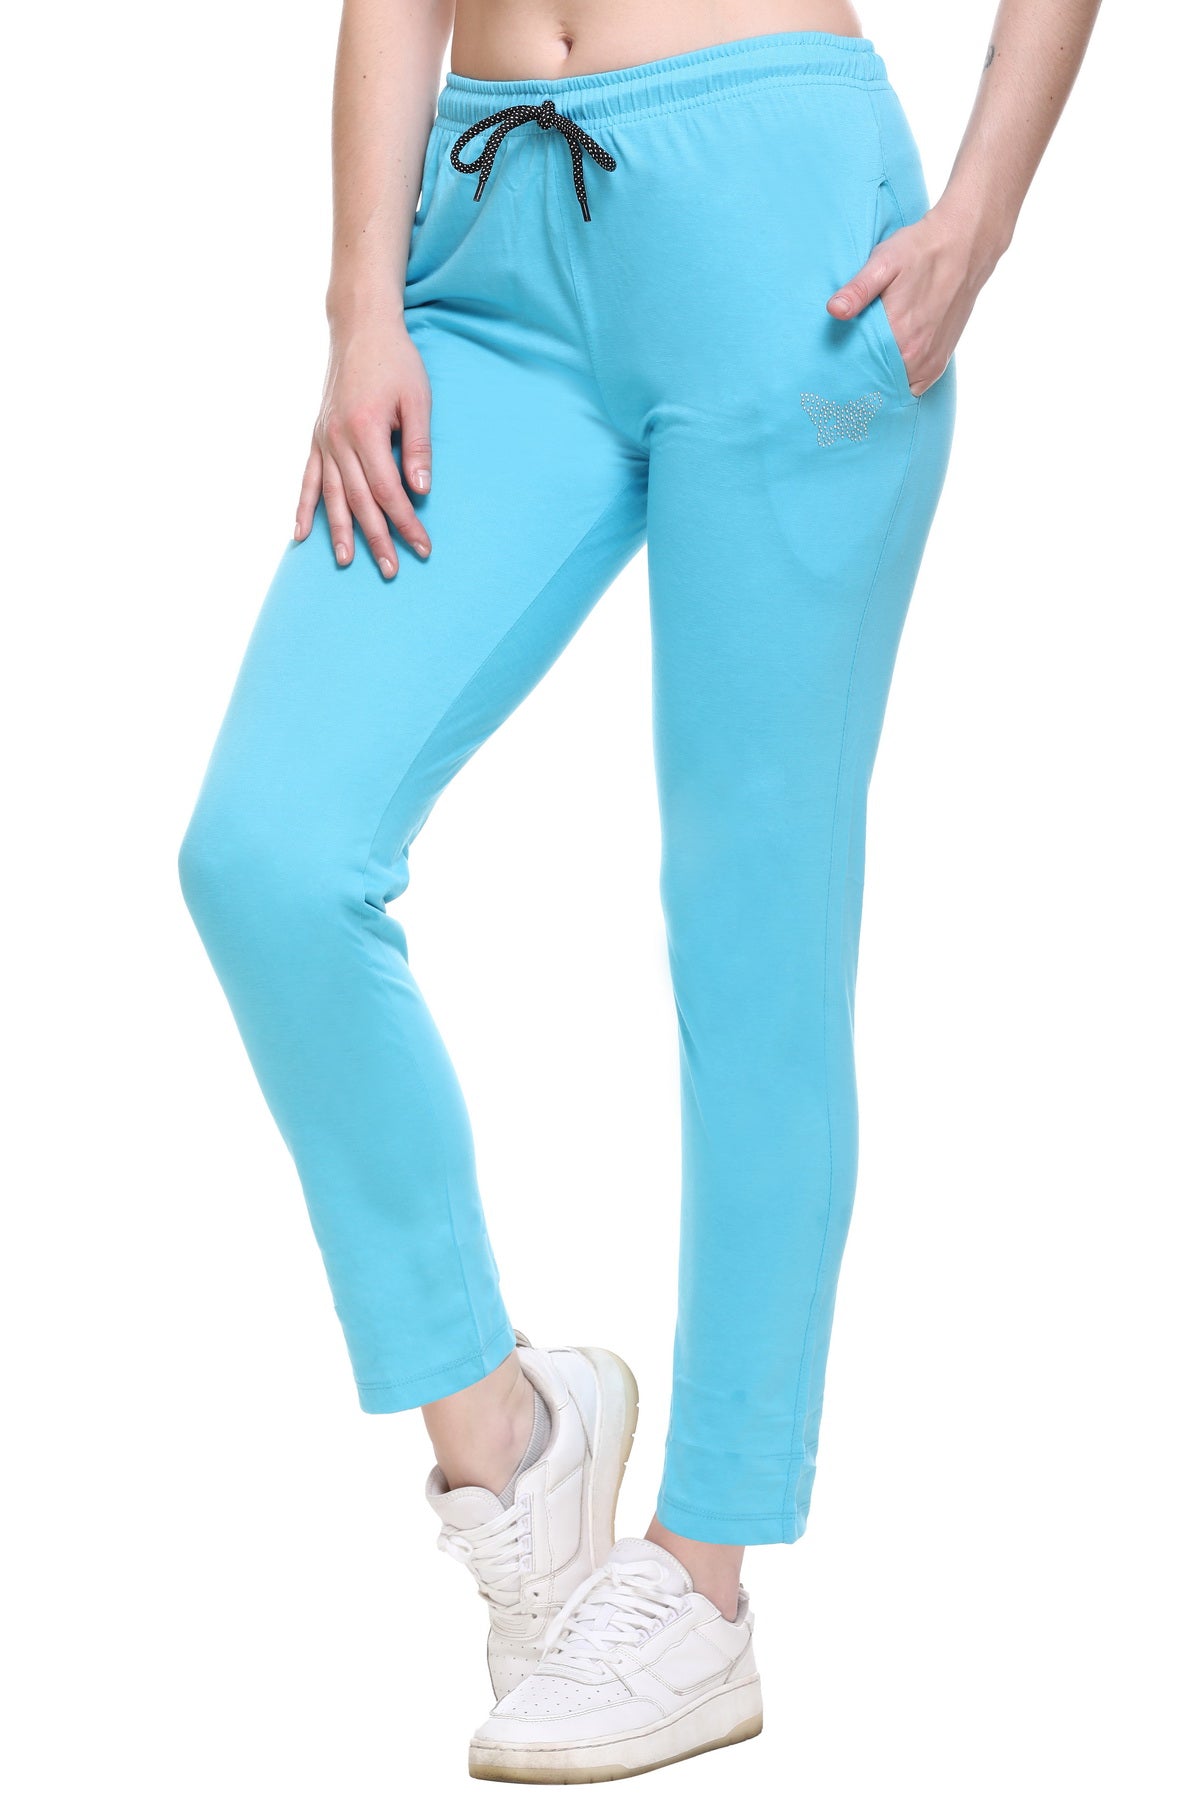 Cotton Track Pants For Women - Aqua